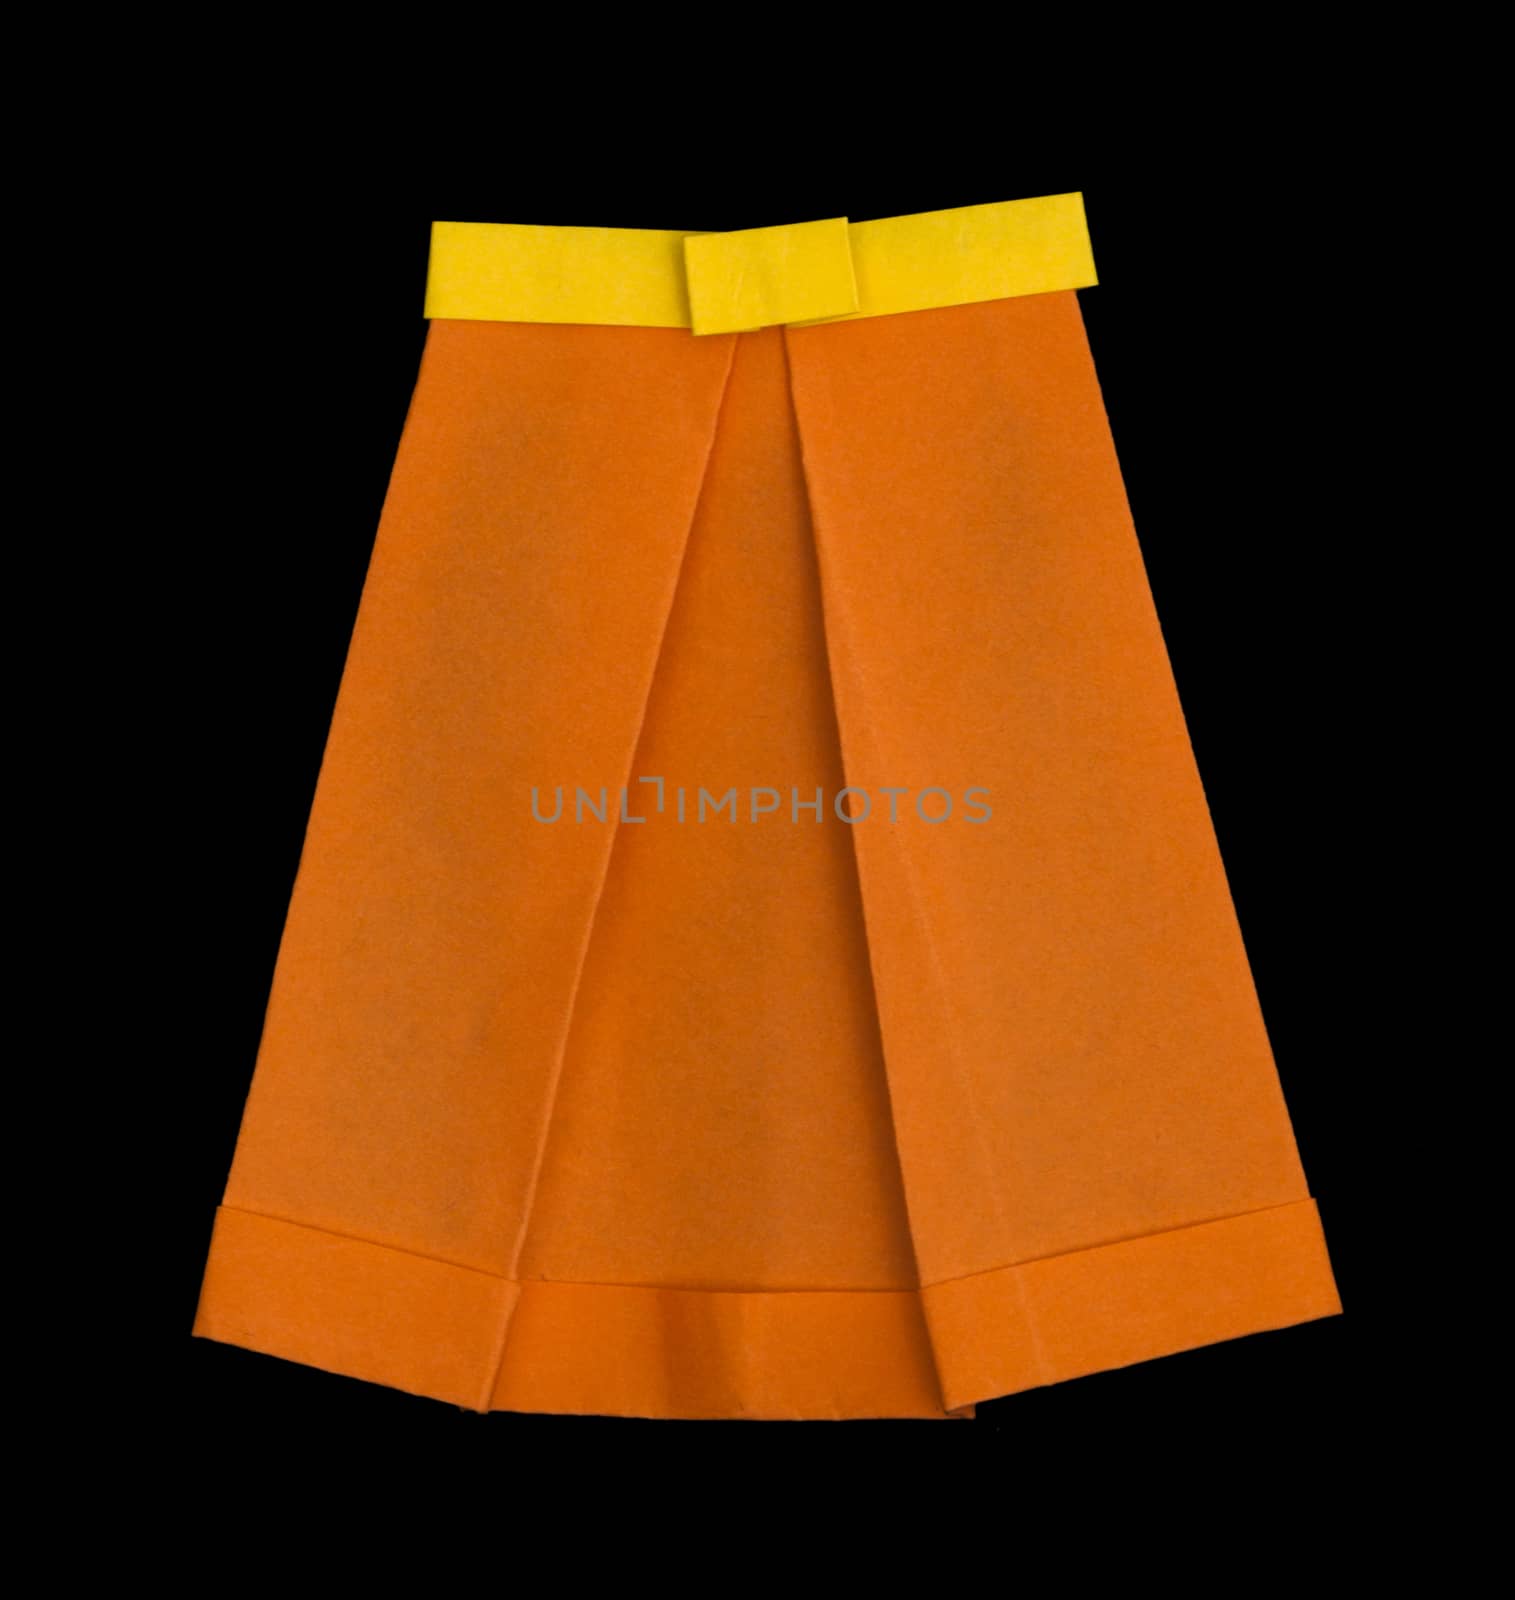 Skirt folded origami style by deyan_georgiev